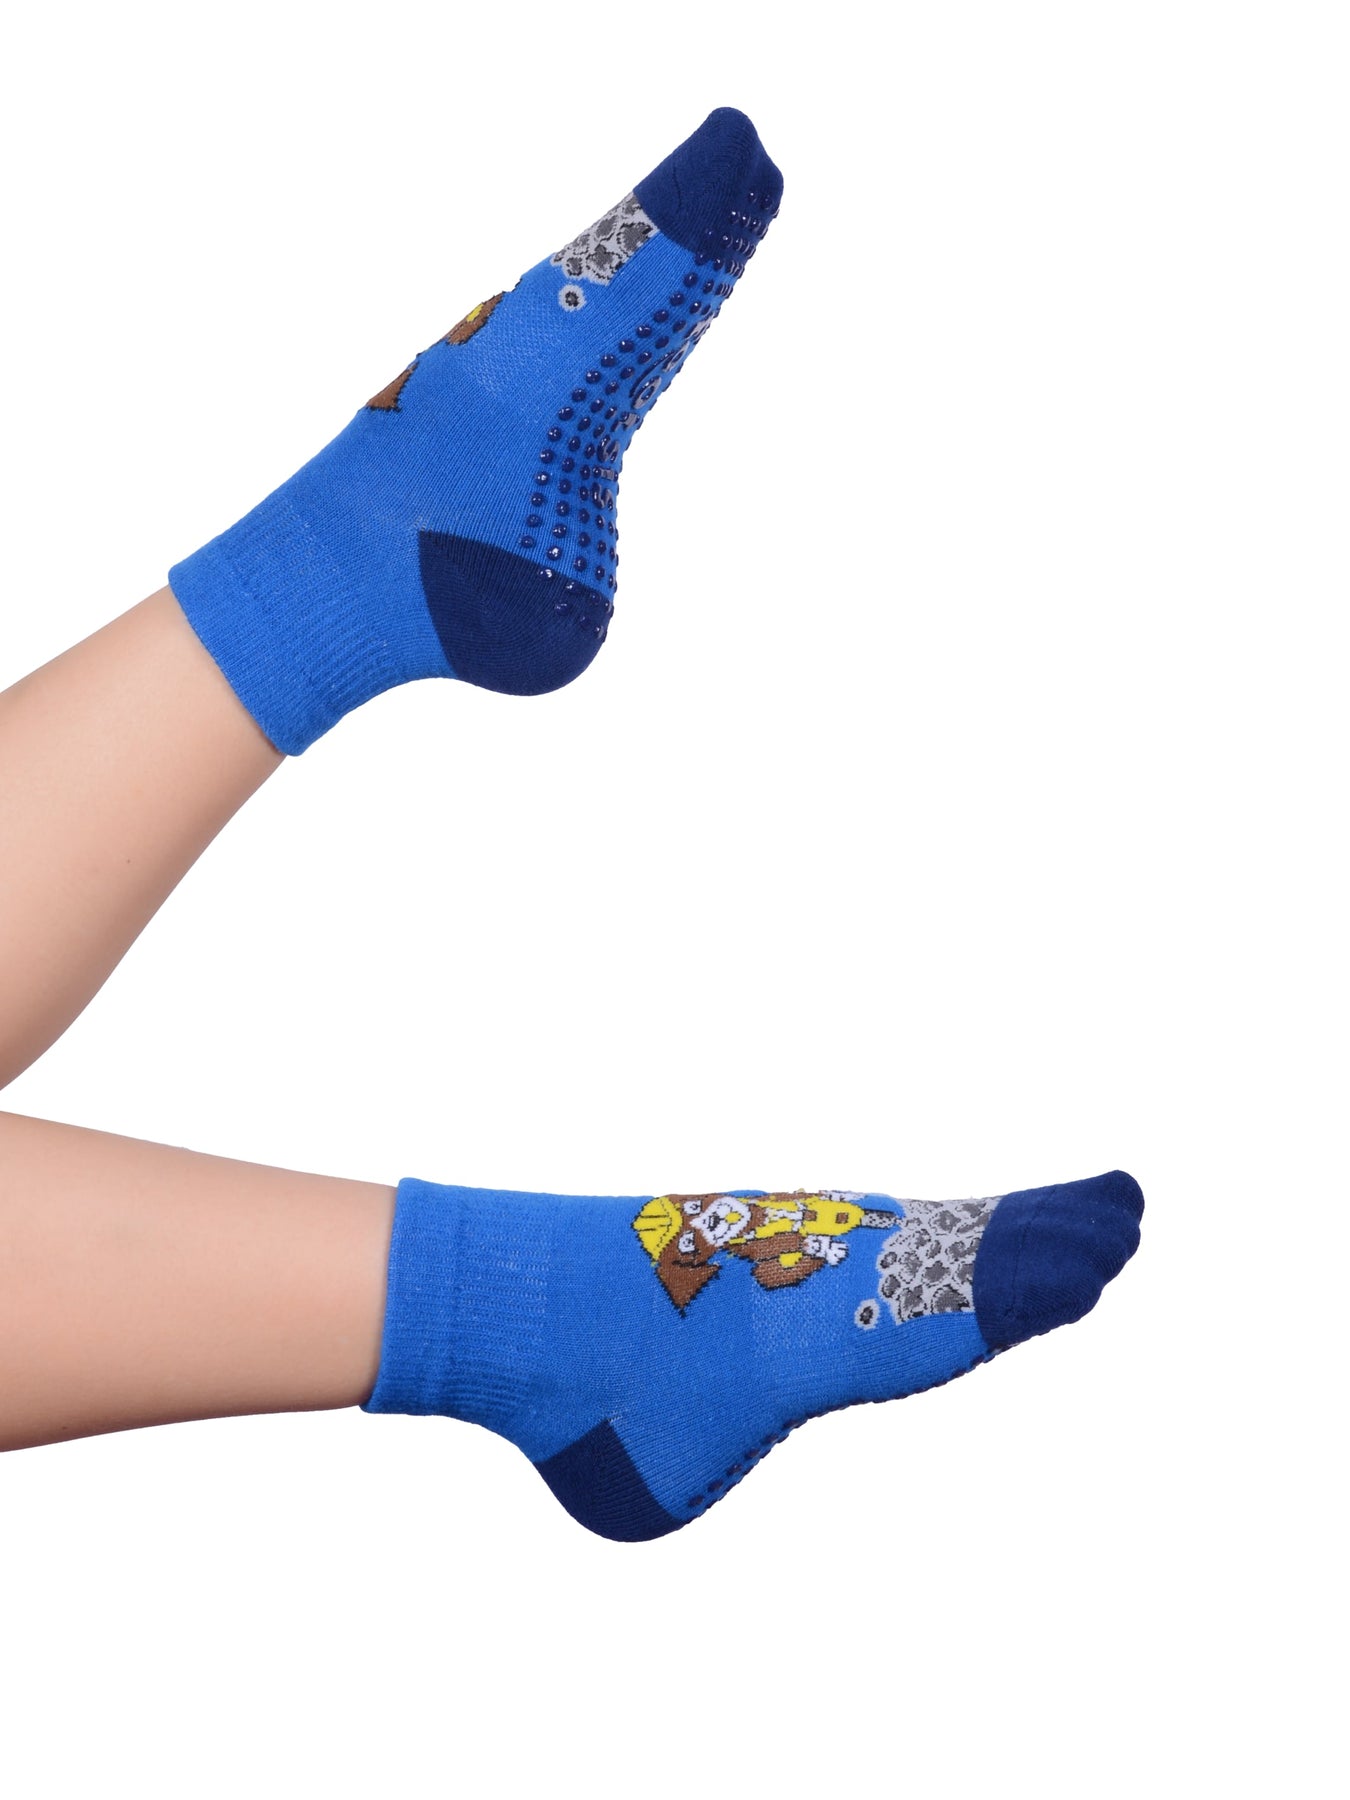 FOOTSIS Non Slip Grip Socks for Yoga, Pilates, Barre, Home